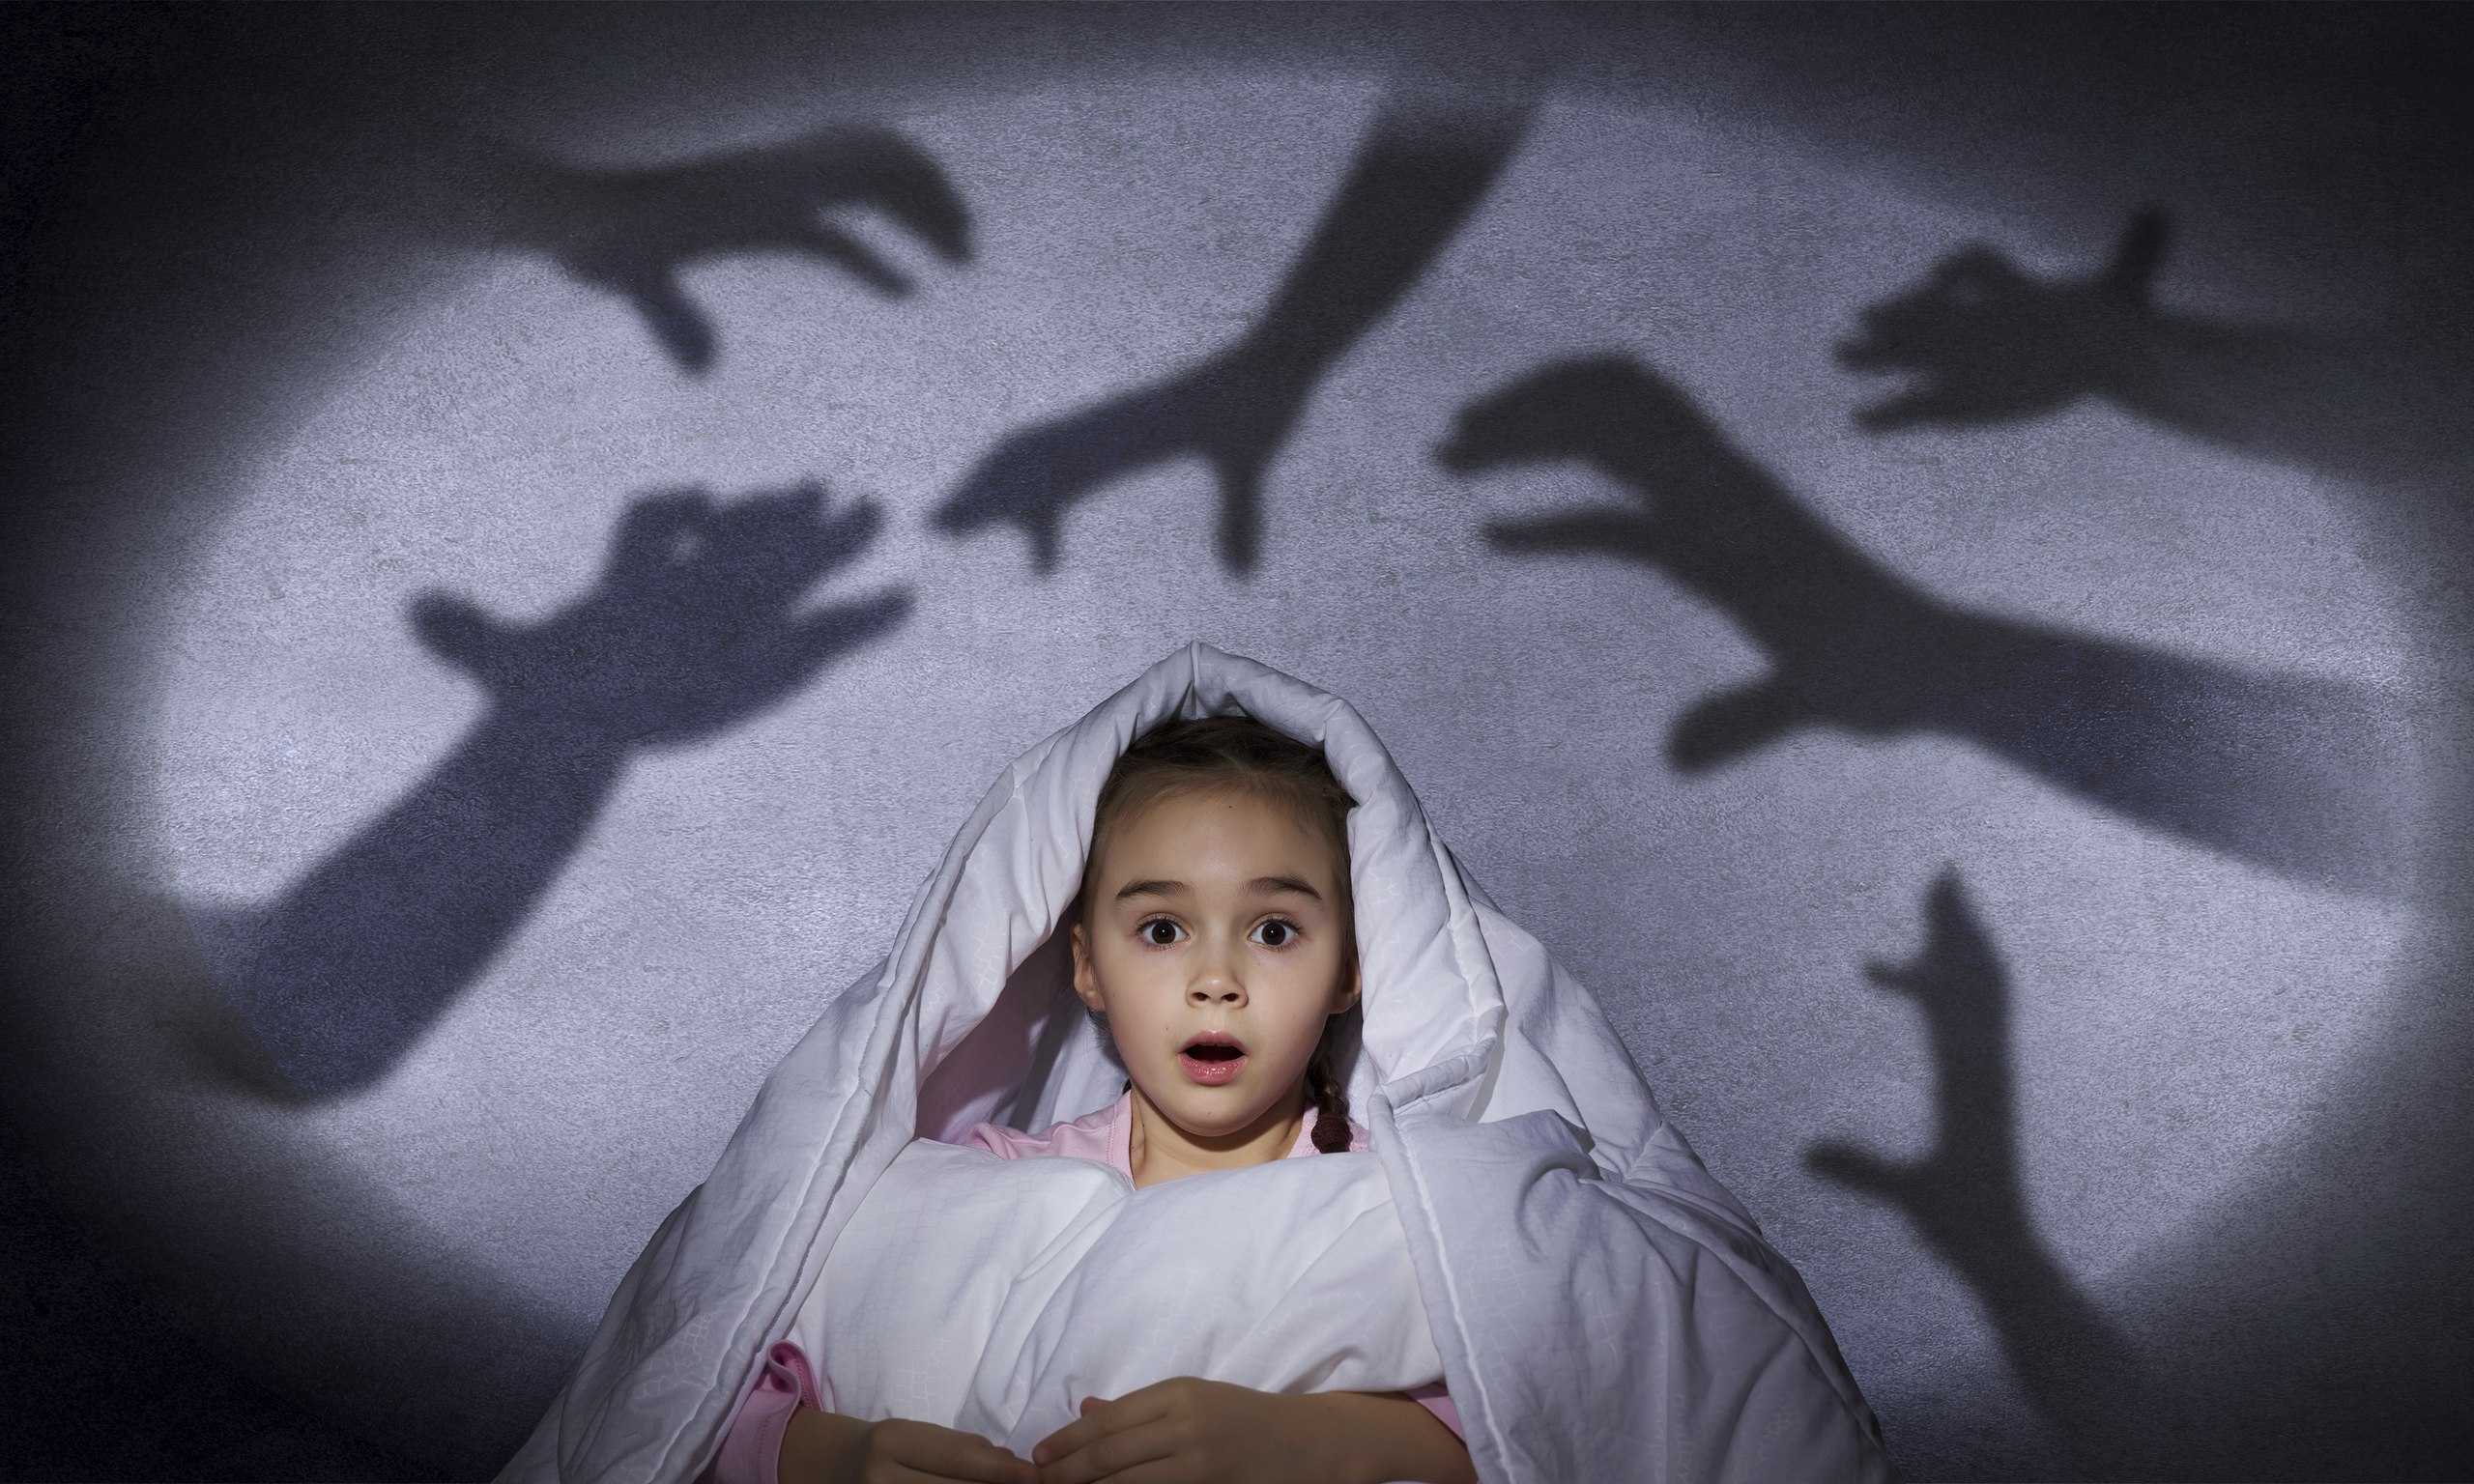 Ребенок боится темноты: советы психолога